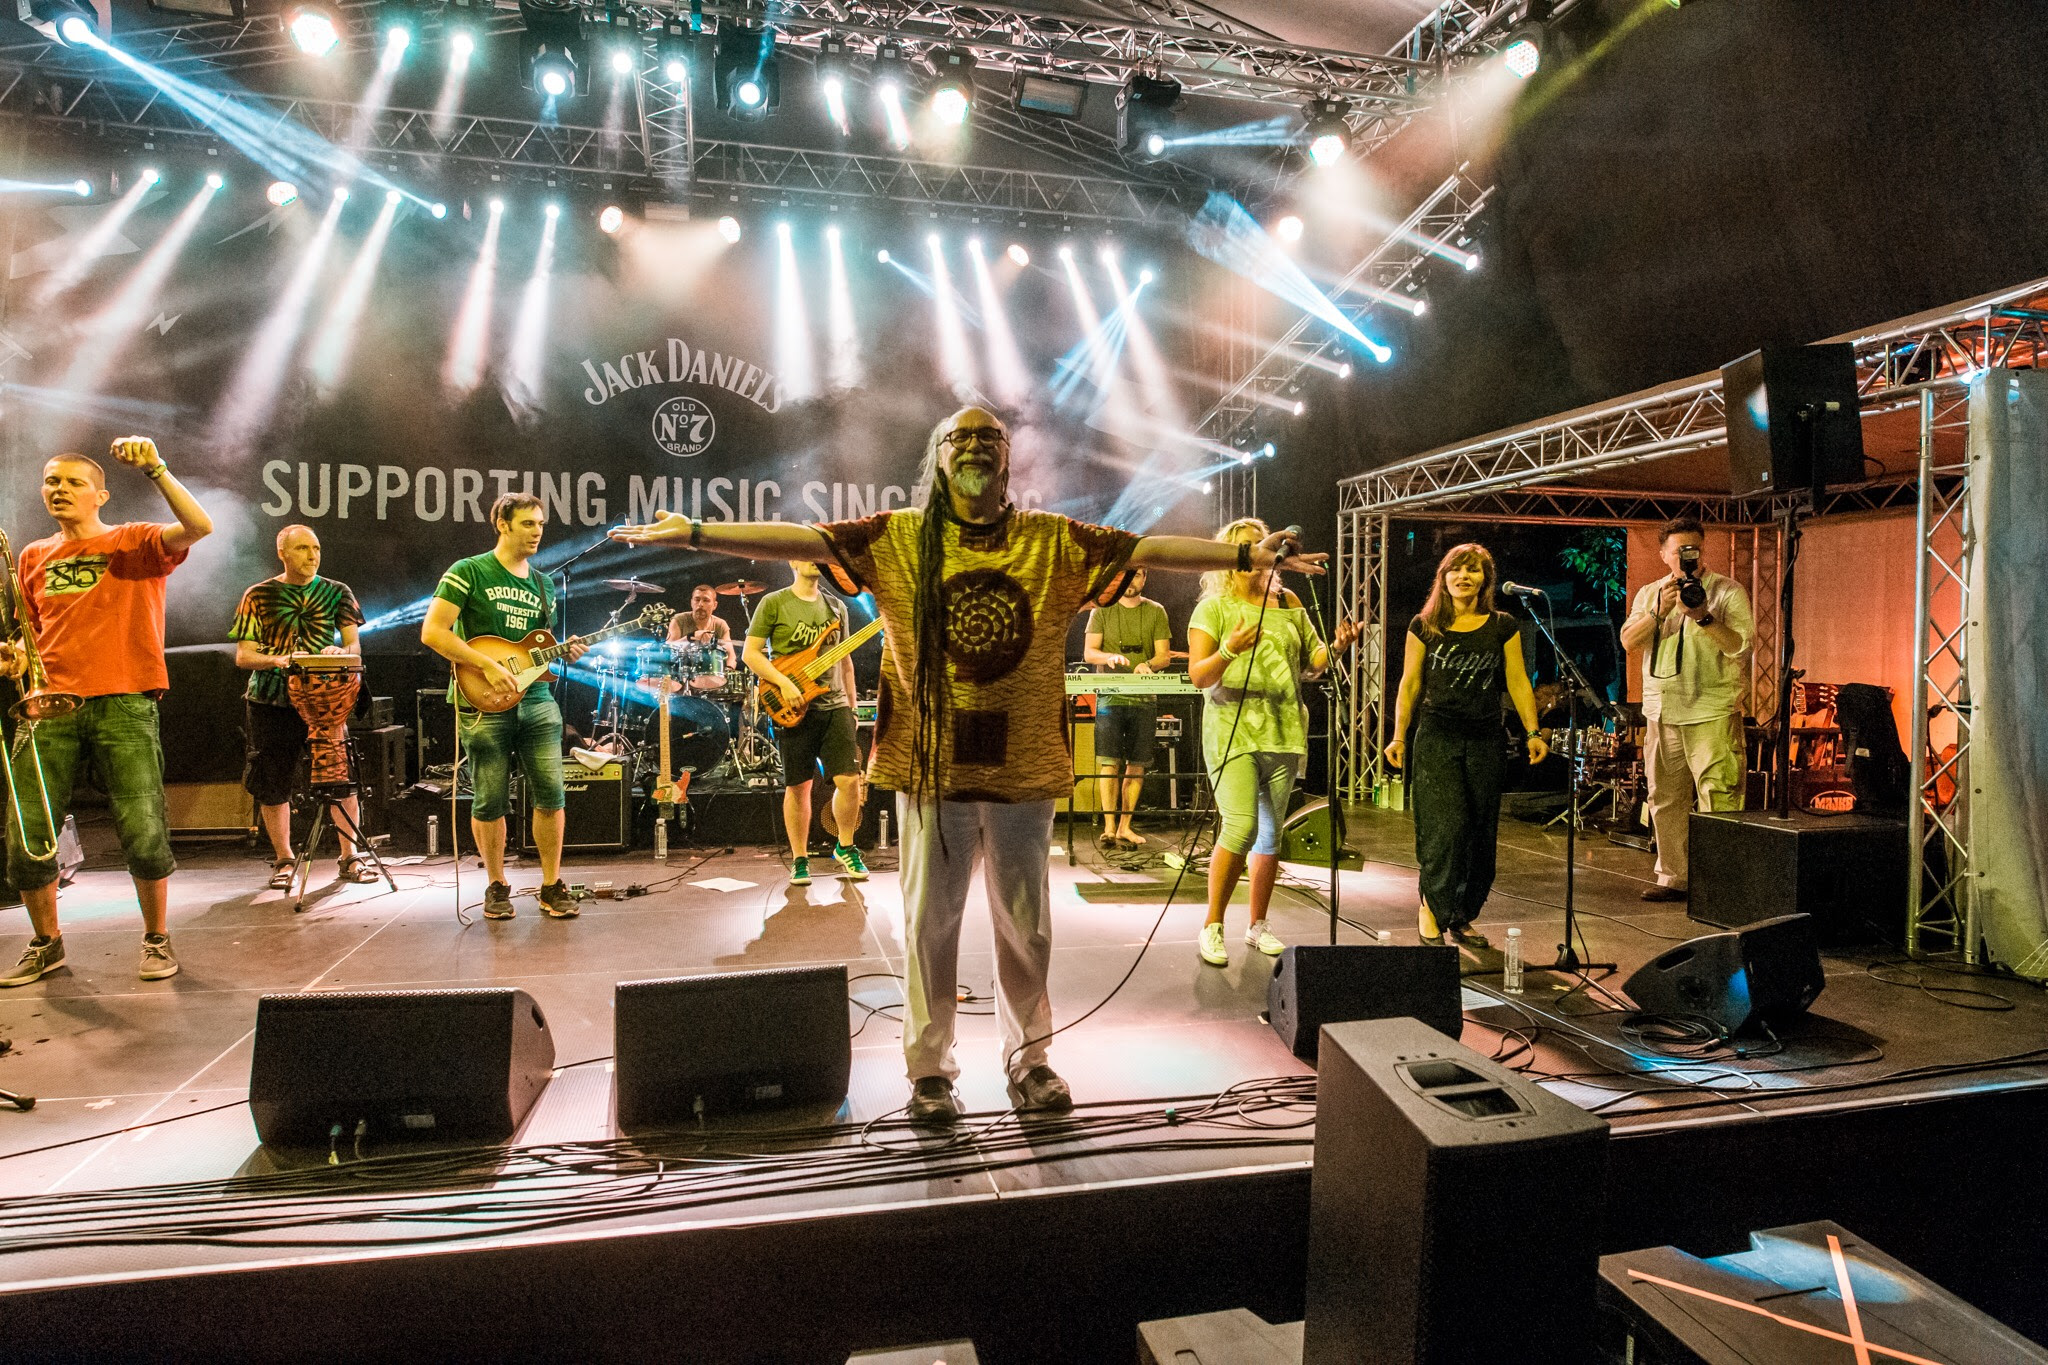 Del Arno Band otvara novu, sedmu po redu koncertnu sezonu u Božidarcu 